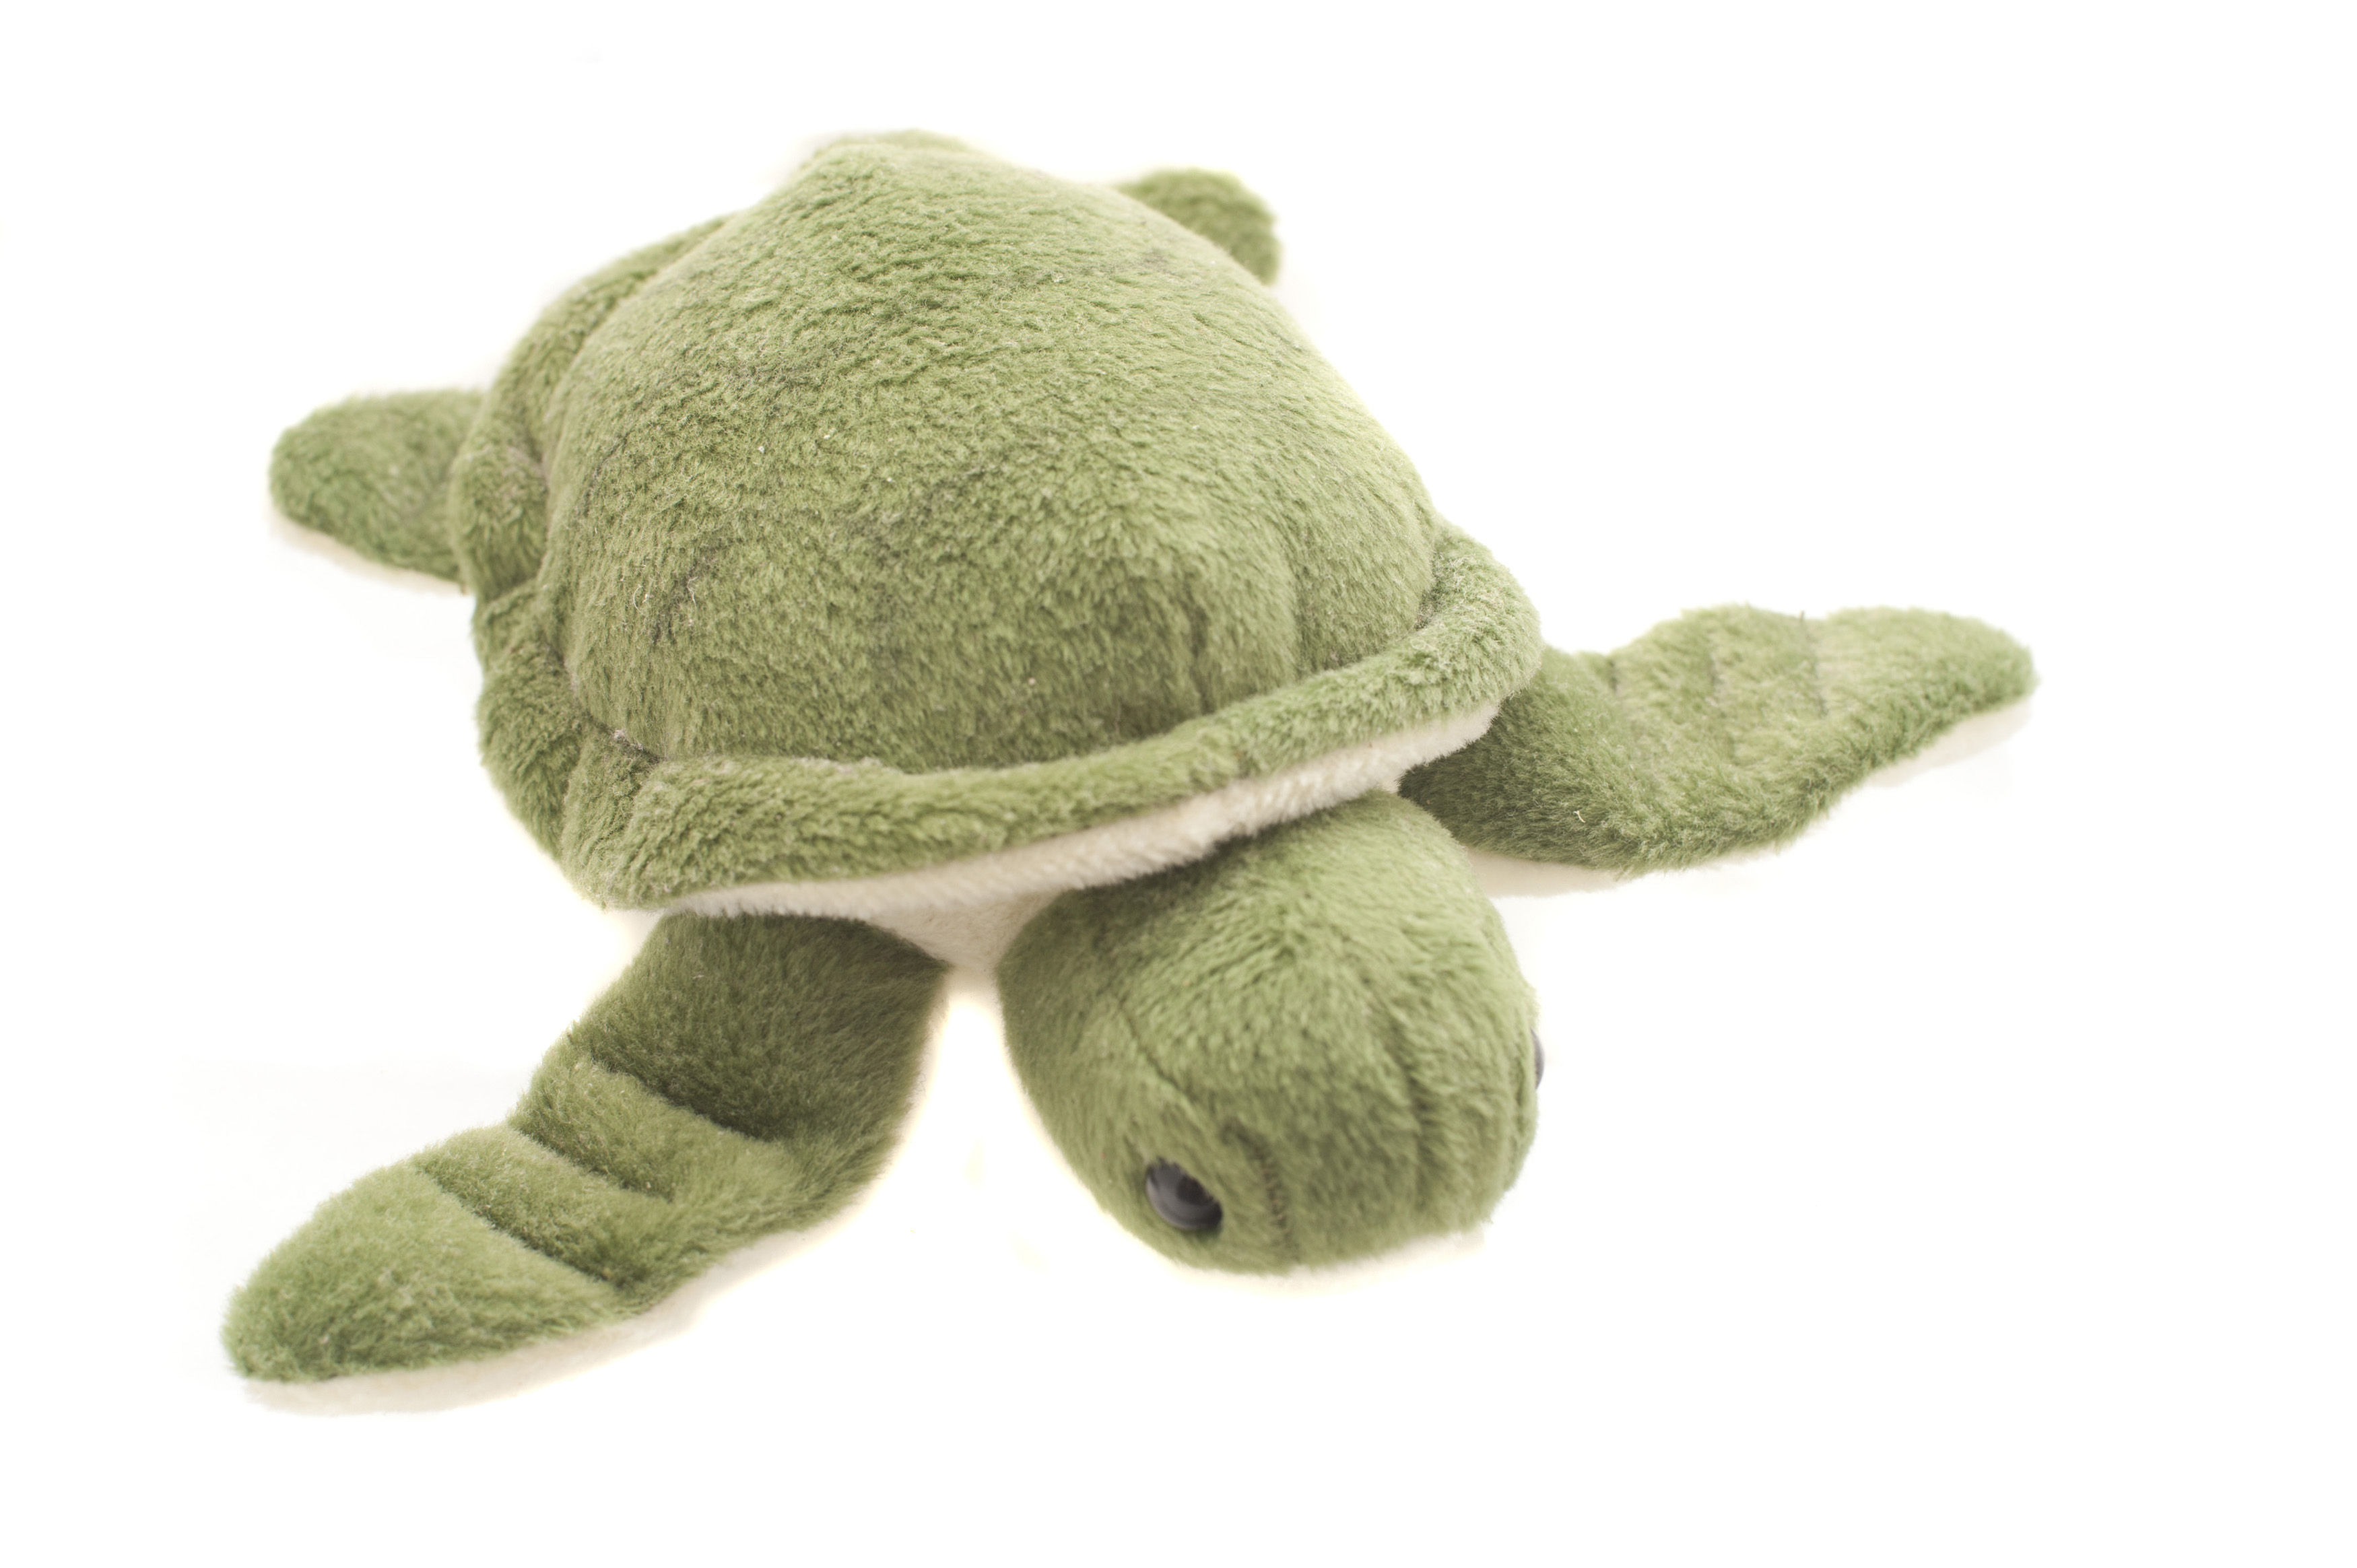 Free Stock Photo 11958 Cute green plush turtle toy